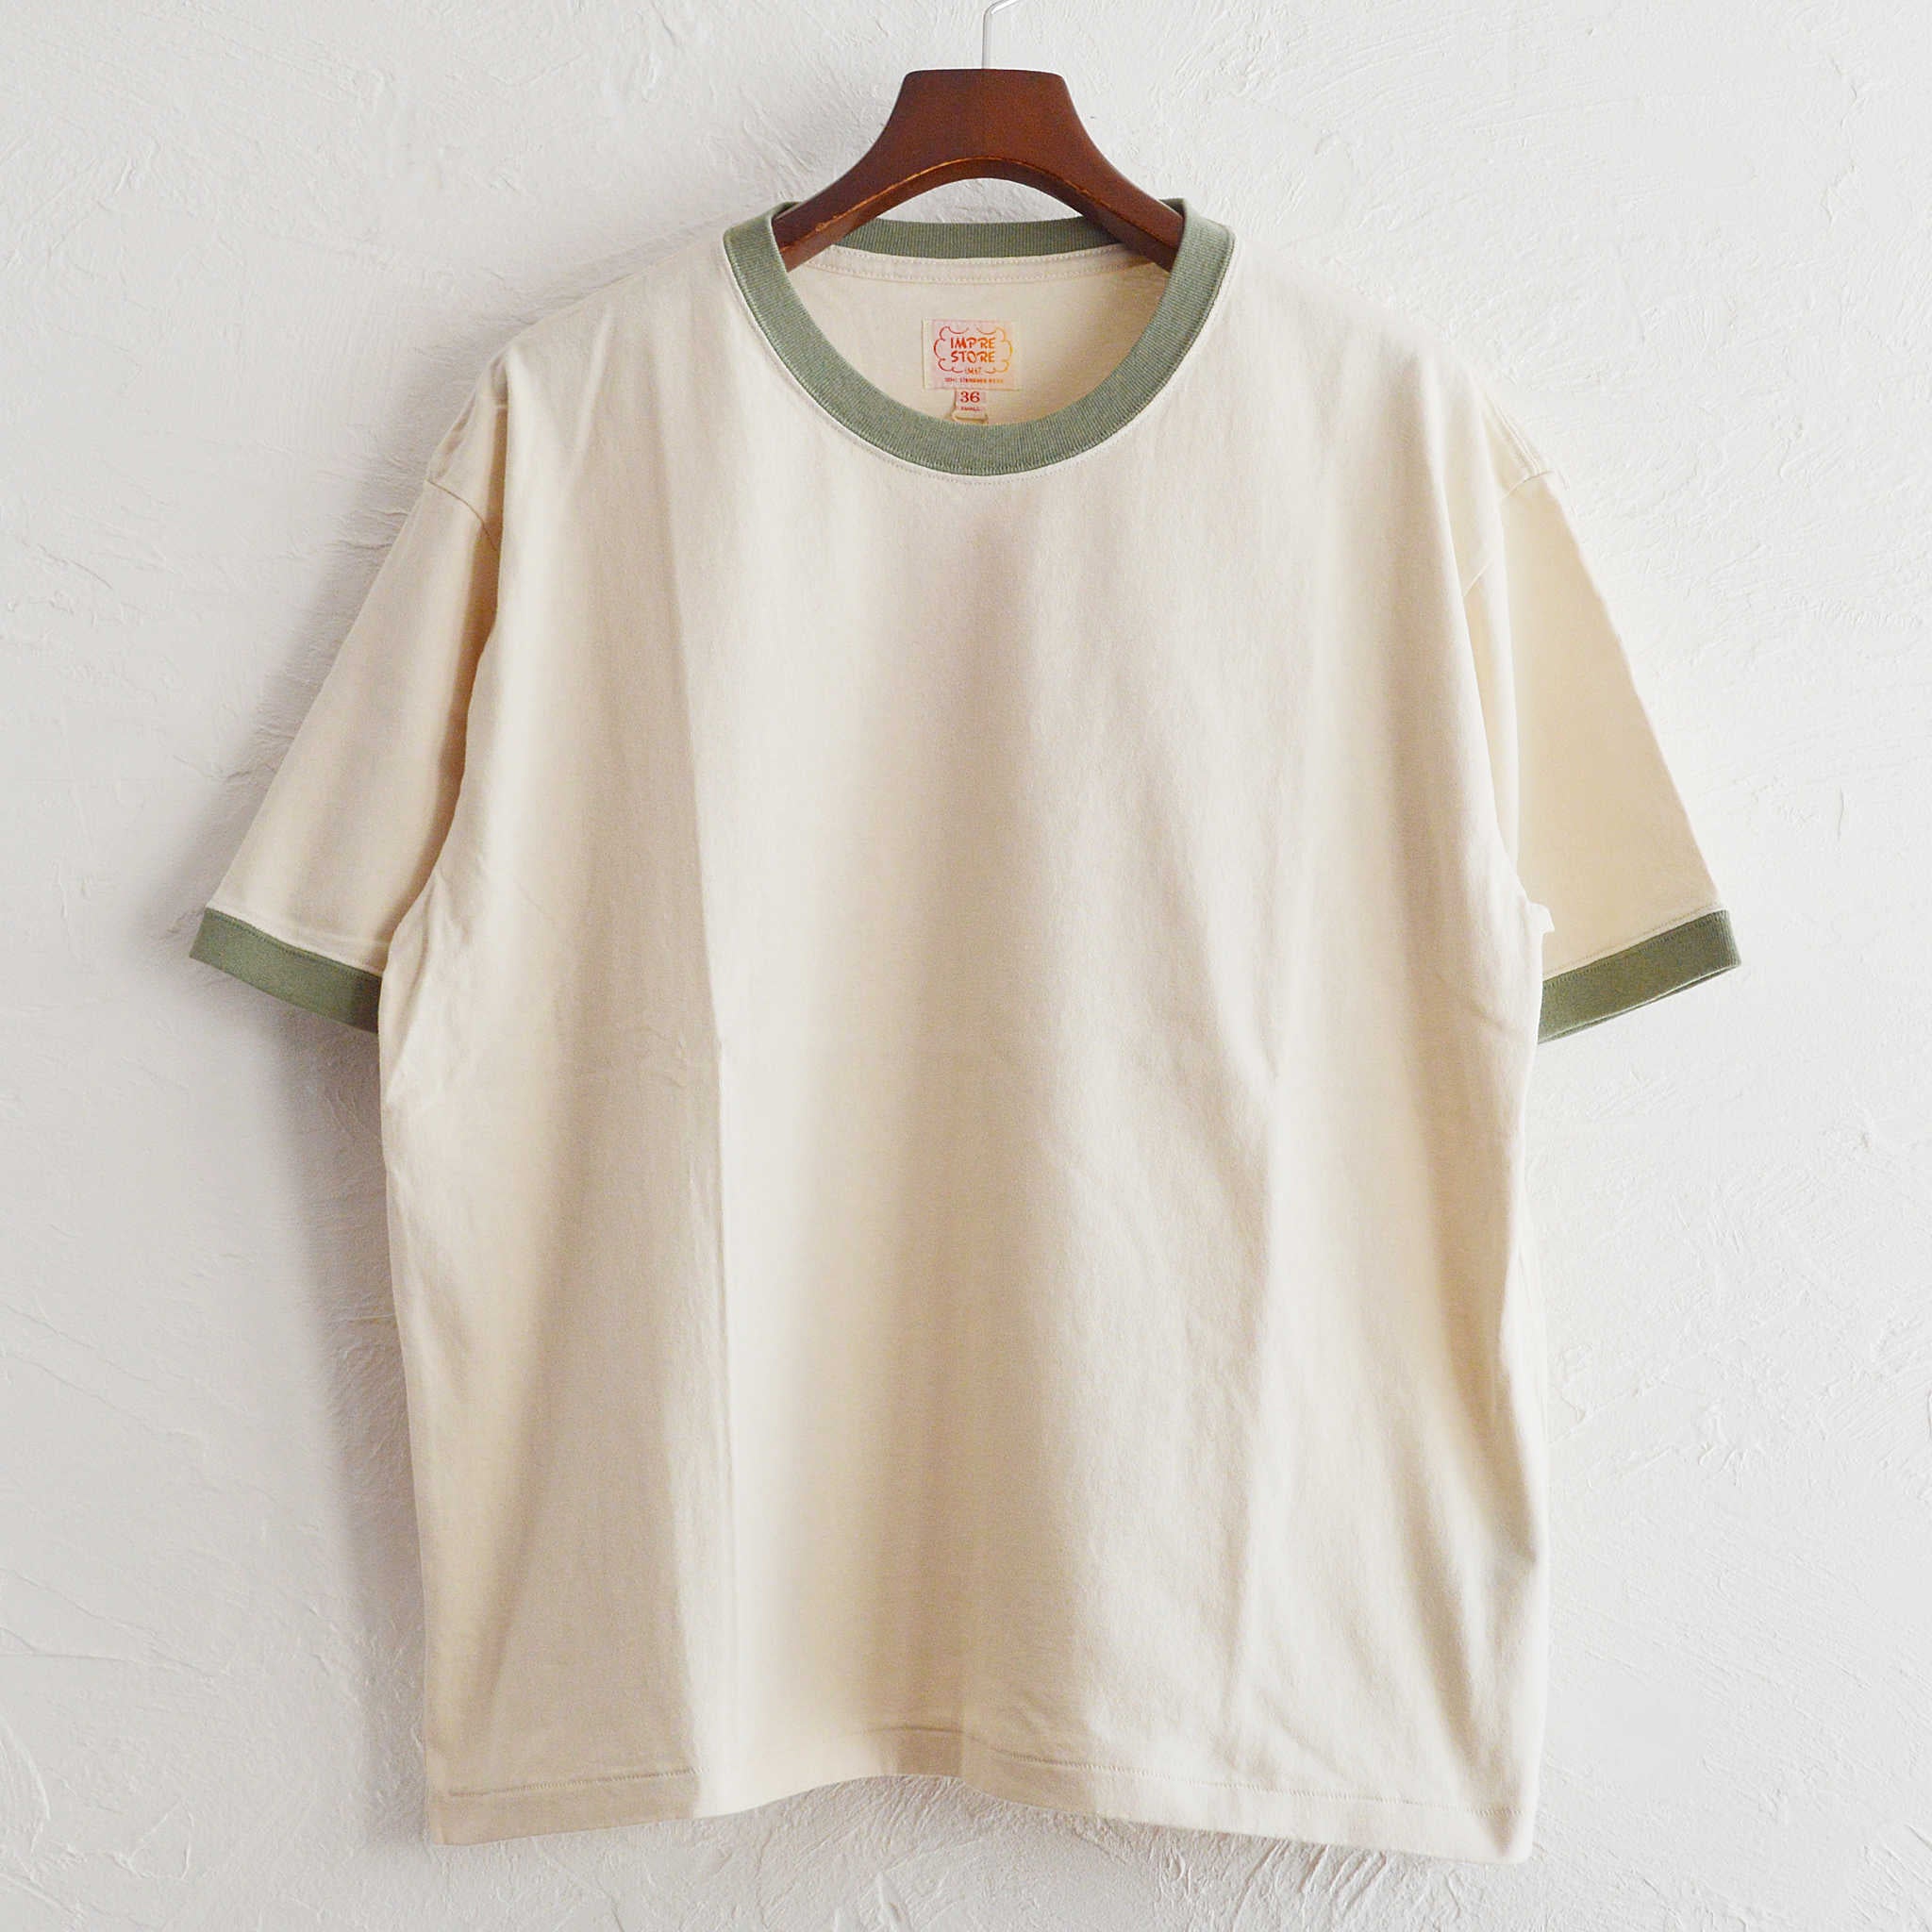 IMPRESTORE インプレストア / Fredy | Ringer Tee shirt  リンガーティーシャツ (SAGE GREEN セージグリーン)